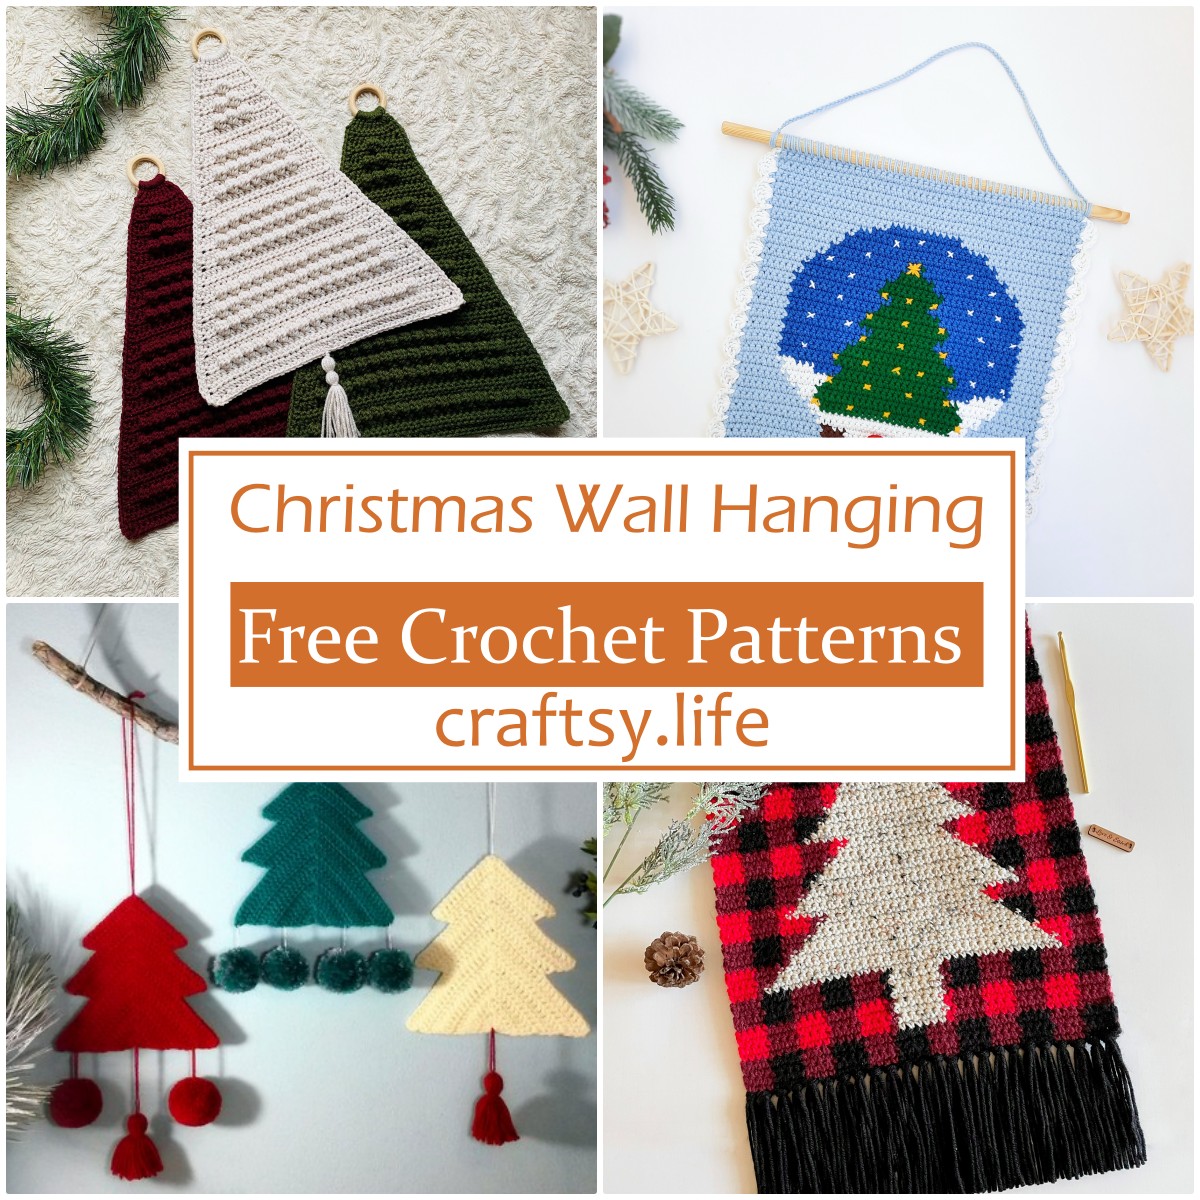 Crochet Christmas Wall Hanging Patterns